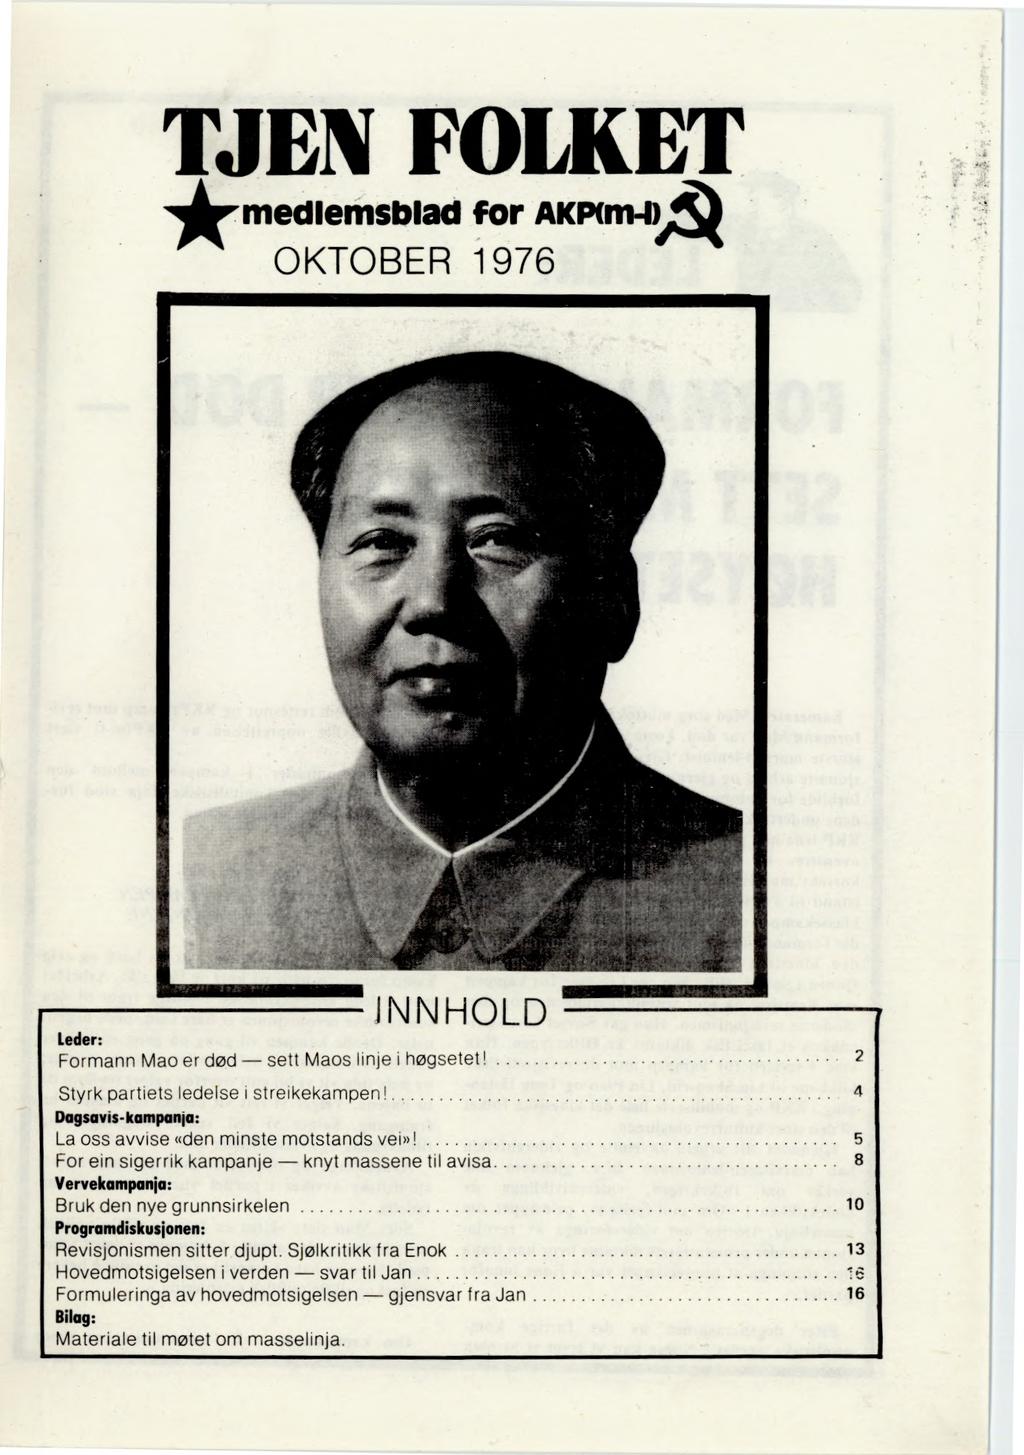 TJEN FOLKET medlemsblad for AKP(m-IA OKTOBER 1976 INNHOLD Leder: Formann Mao er død sett Maos linje i høgsetet! 2 Styrk partiets ledelse i streikekampen!